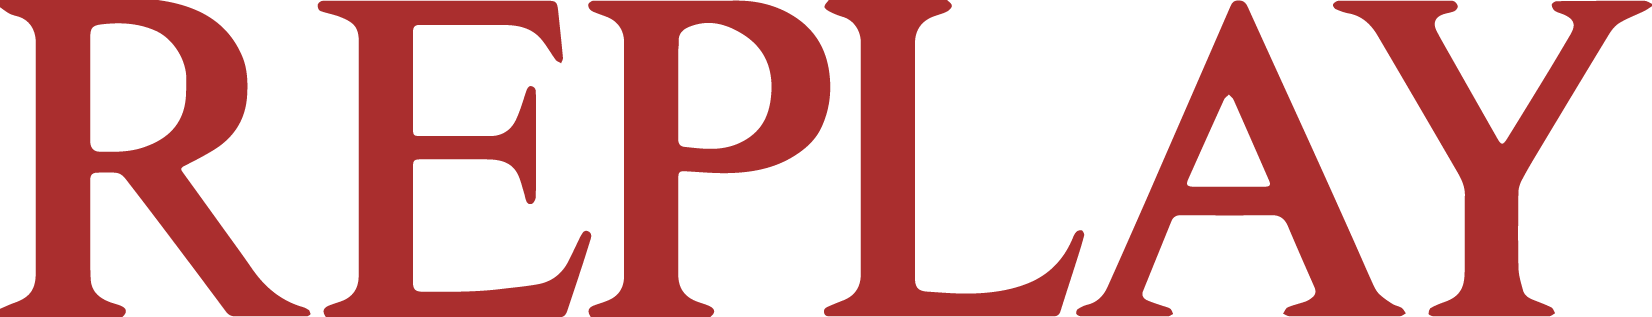 Replay Logo - Replay logo png 3 » PNG Image